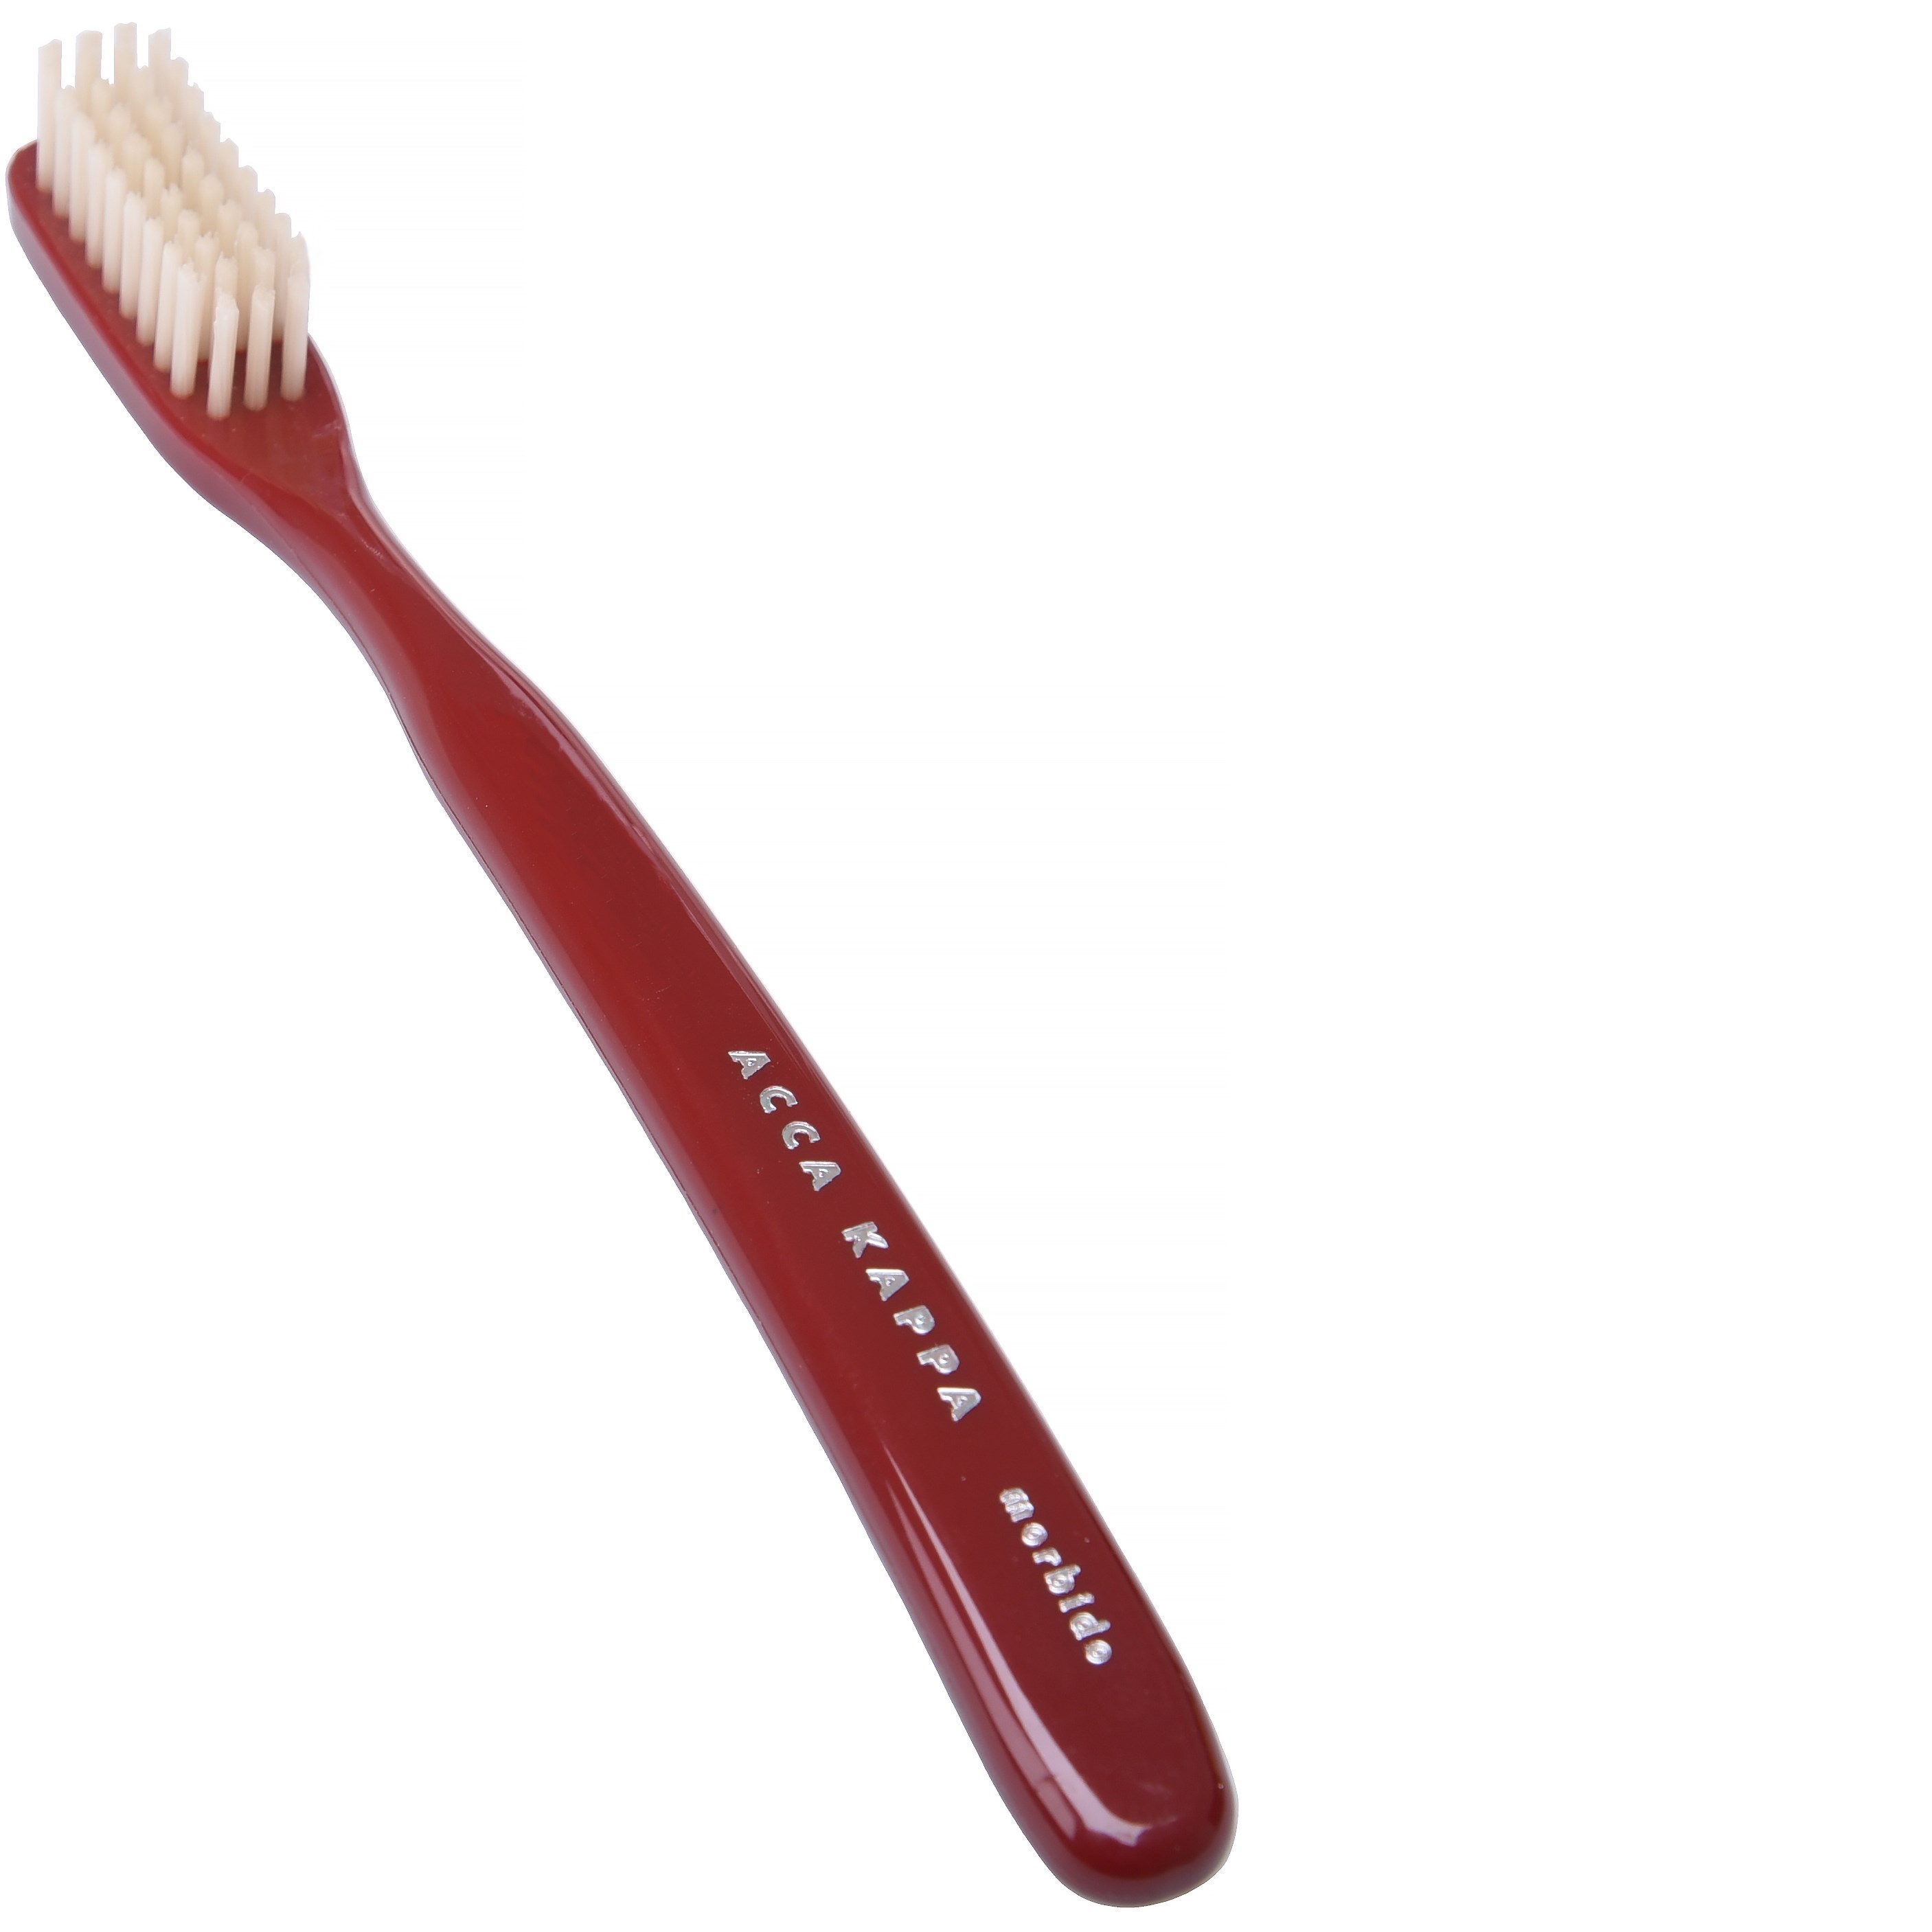 Bilde av Acca Kappa Tooth Brush Vintage Medium Nylon Bristles Red